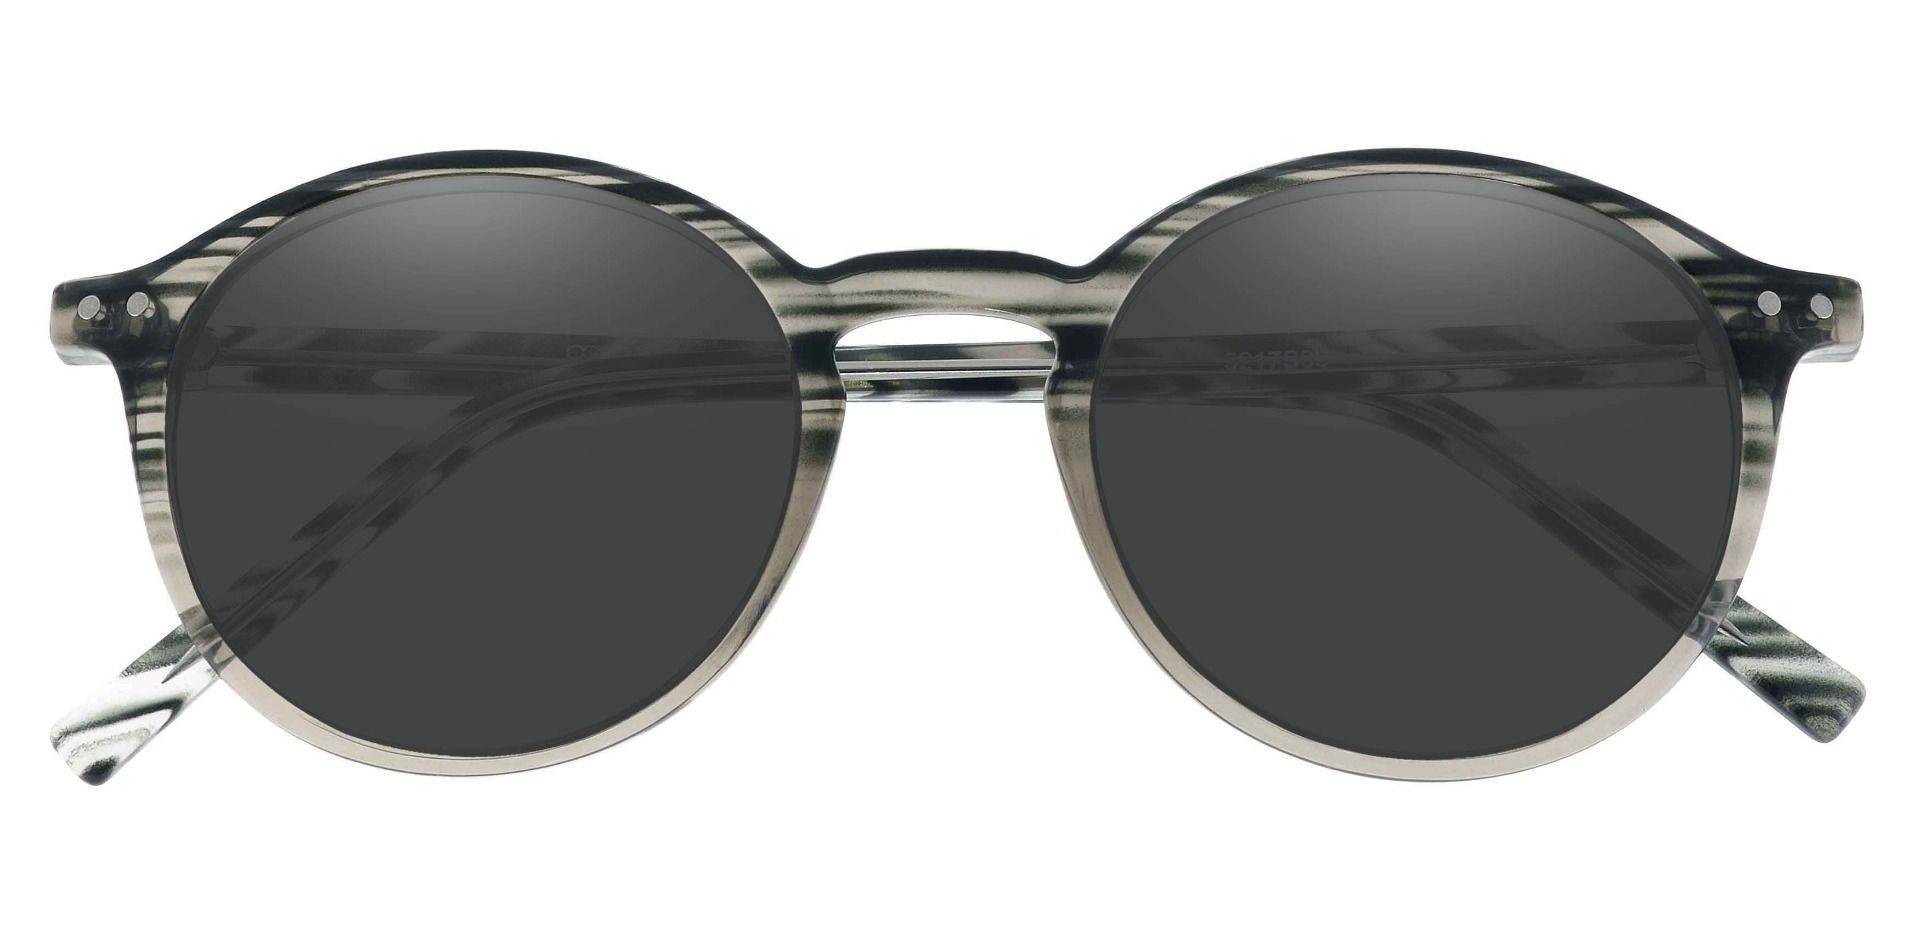 Harvard Round Prescription Sunglasses - Striped Frame With Gray Lenses